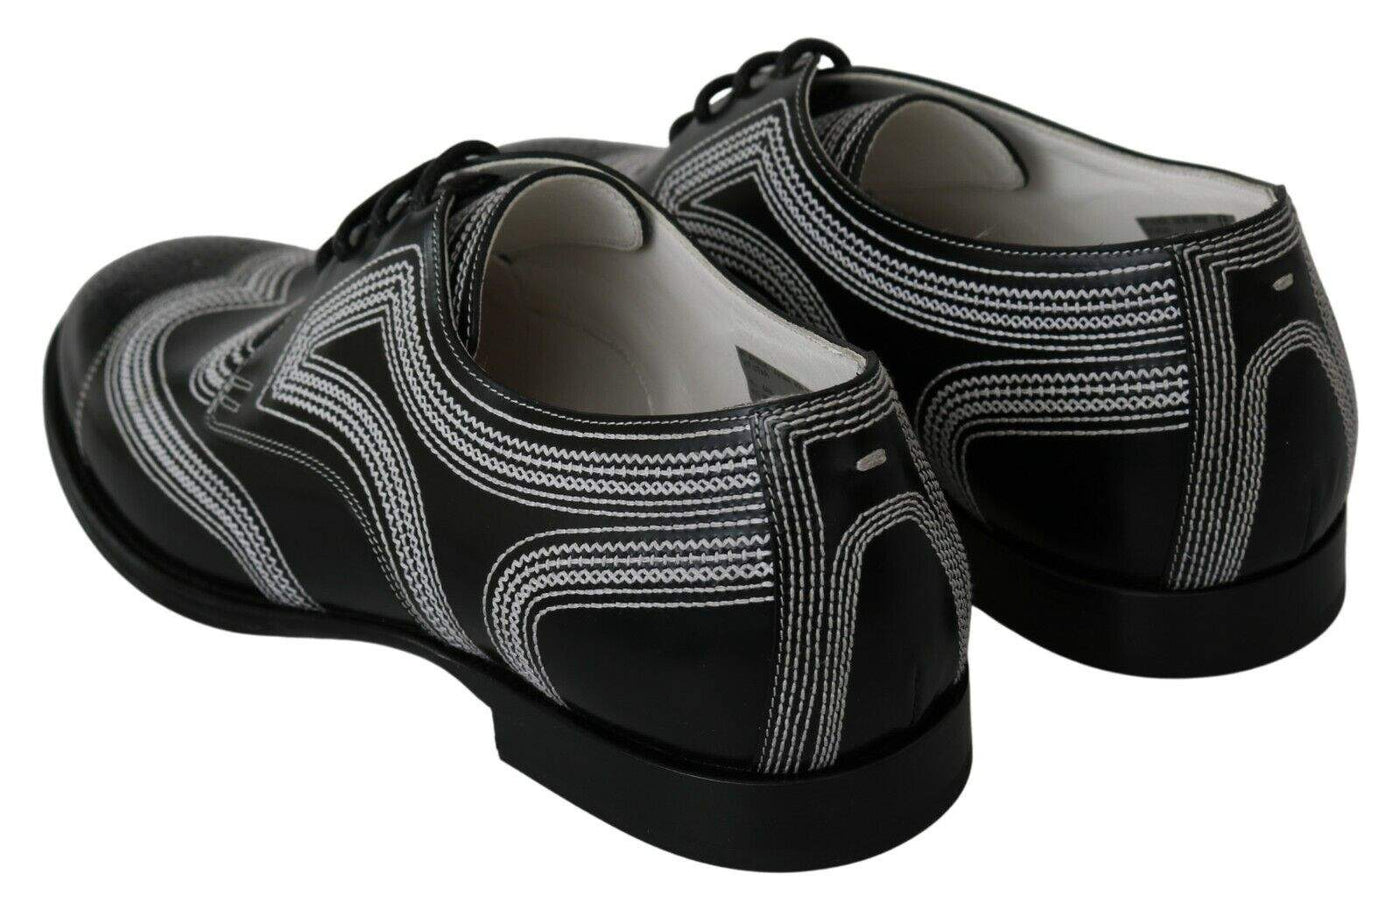 Dolce & Gabbana Black Leather Derby Formal White Lace Shoes #men, Black/White, Dolce & Gabbana, EU44/US11, feed-1, Formal - Men - Shoes at SEYMAYKA